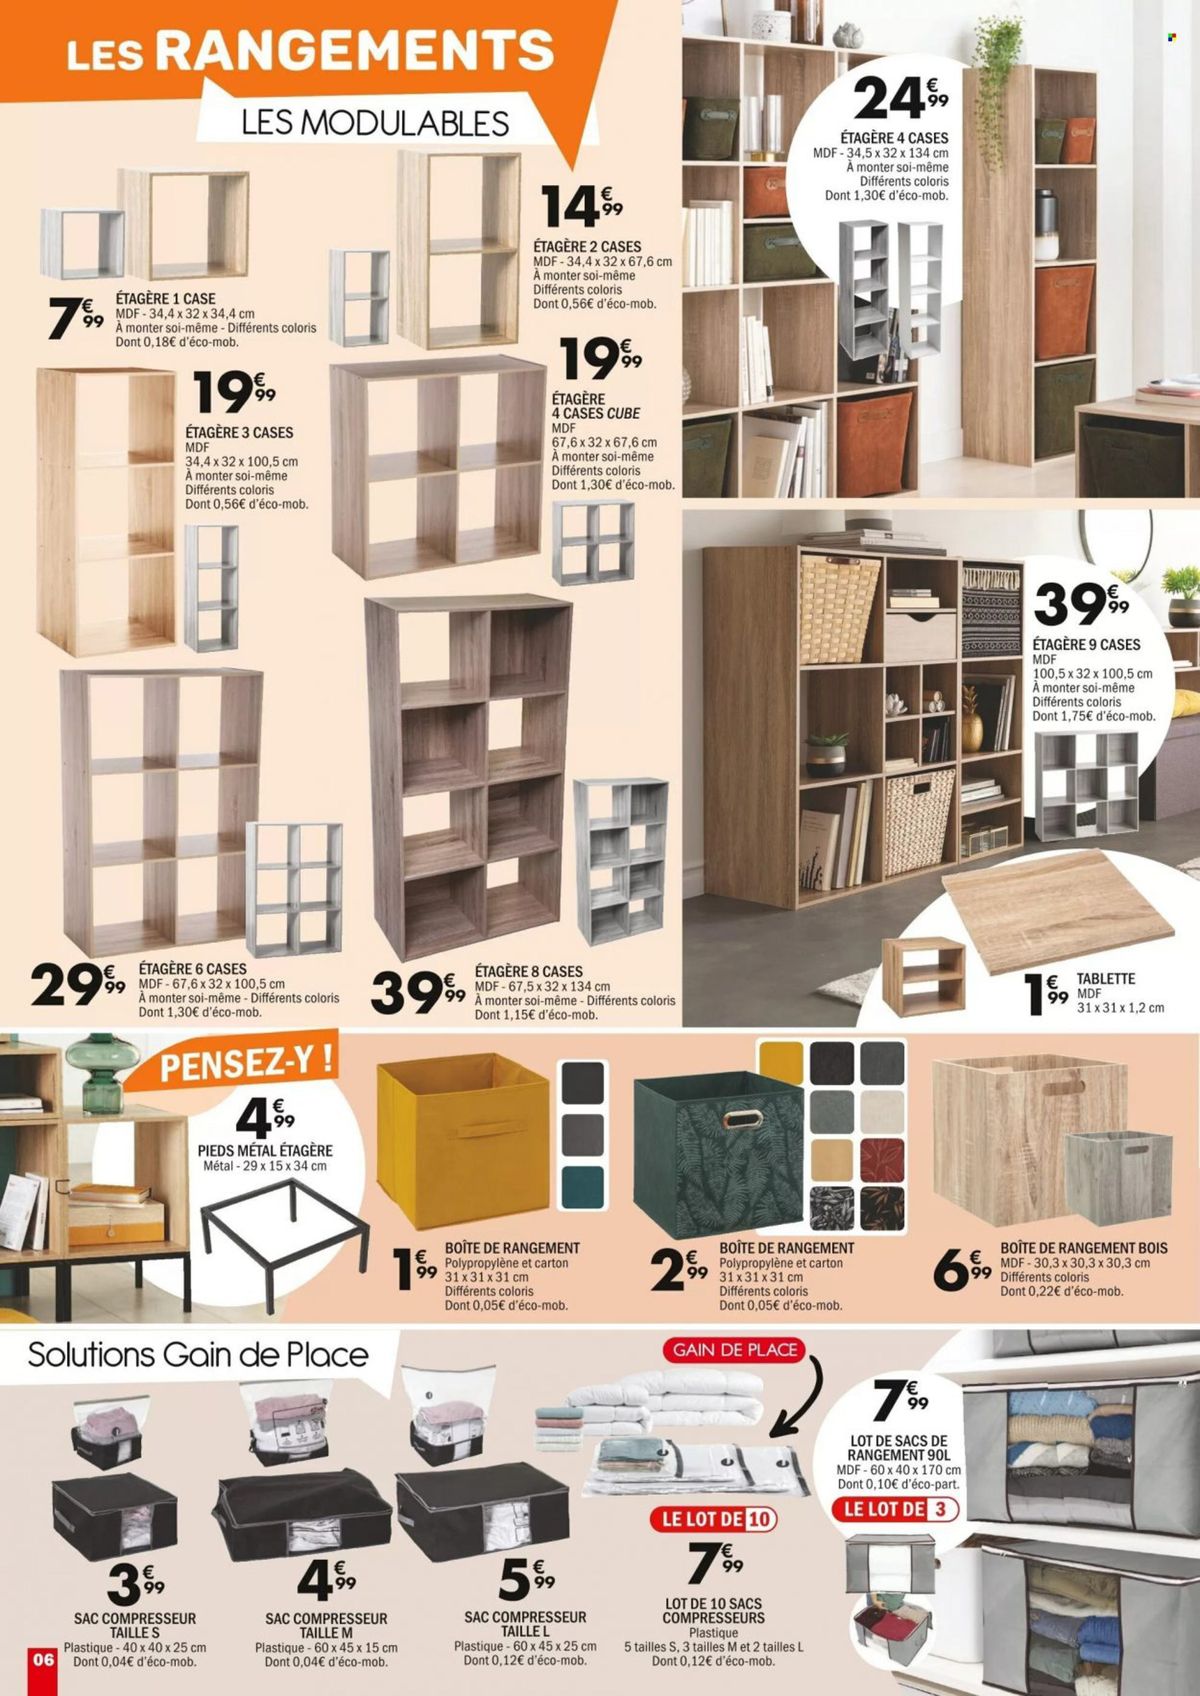 Catalogue Rangements design & petits prix, page 00006